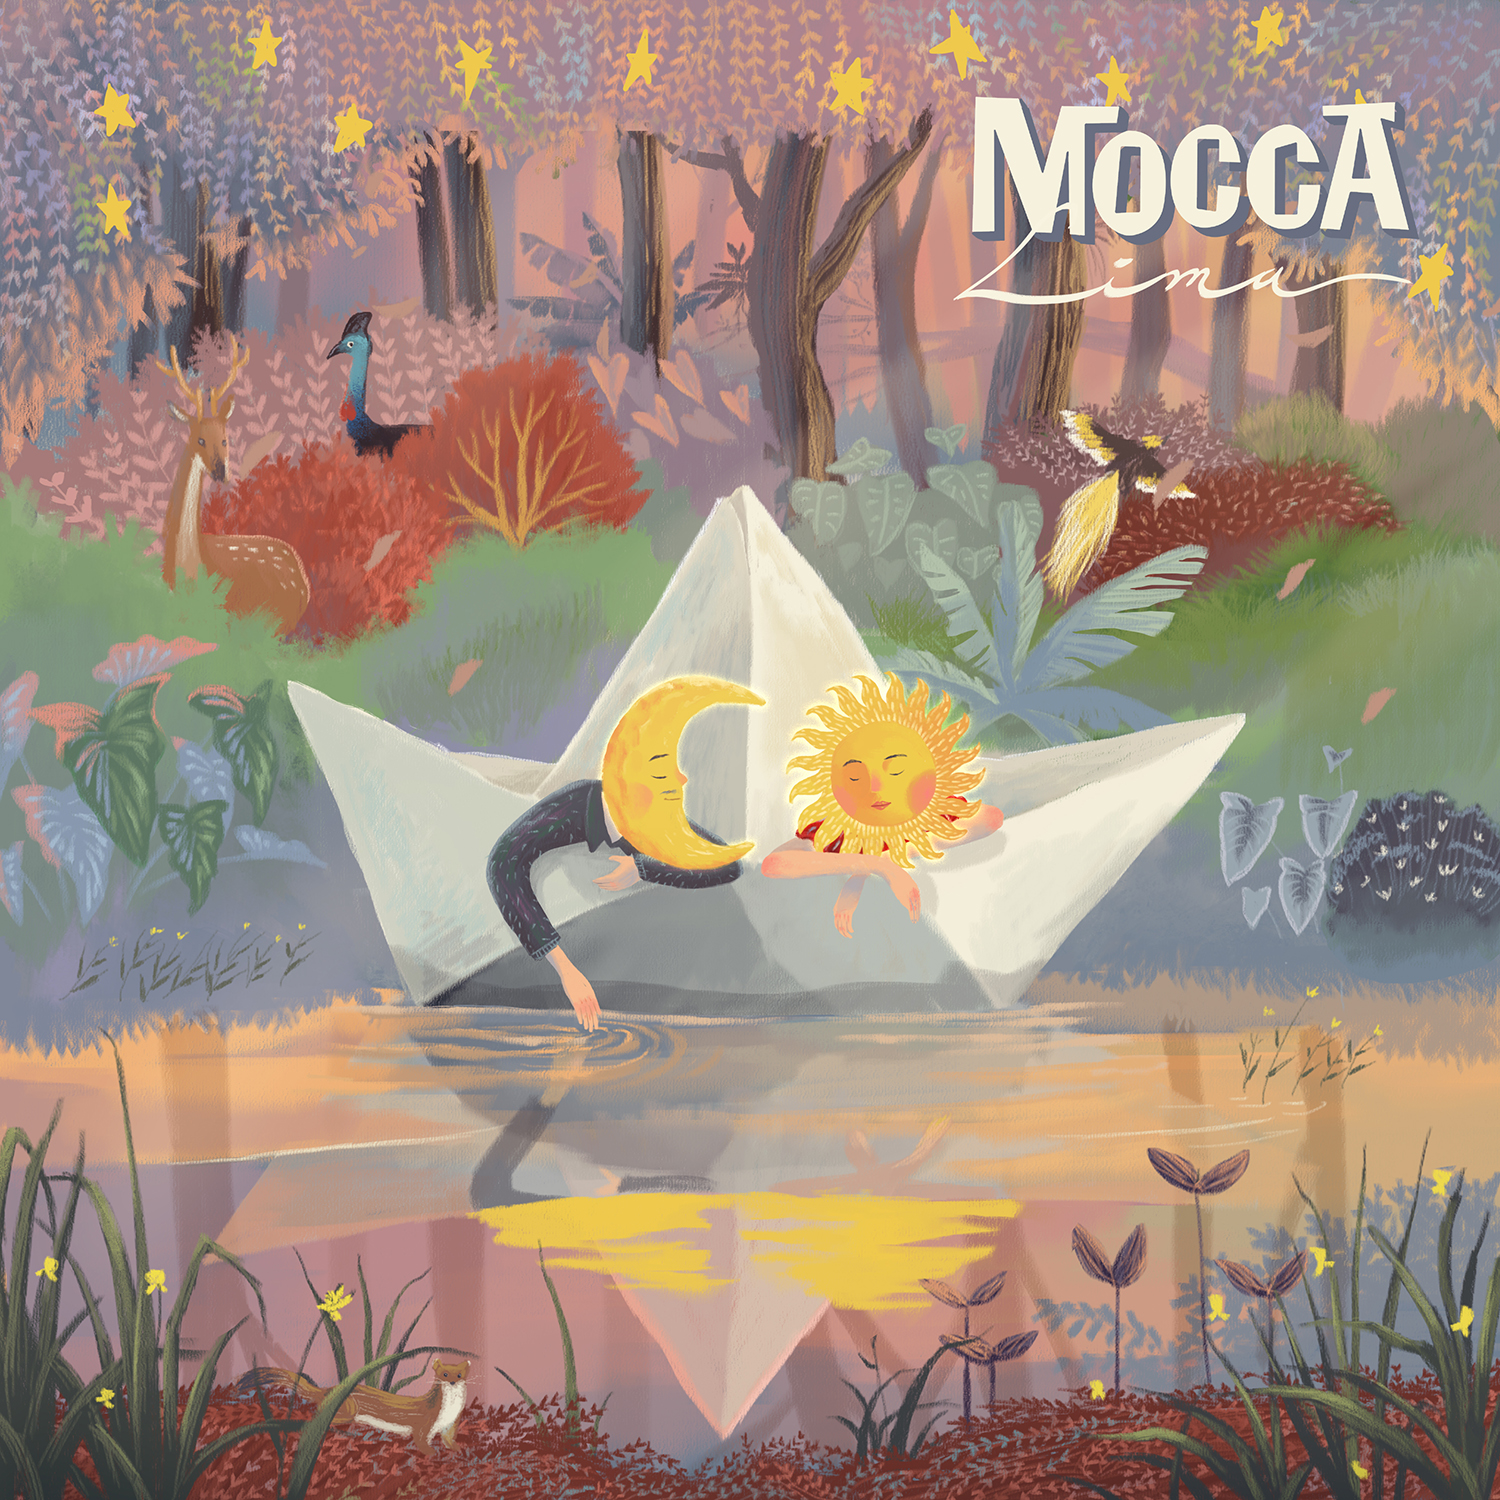 Mocca - Lima (Full Album 2018)